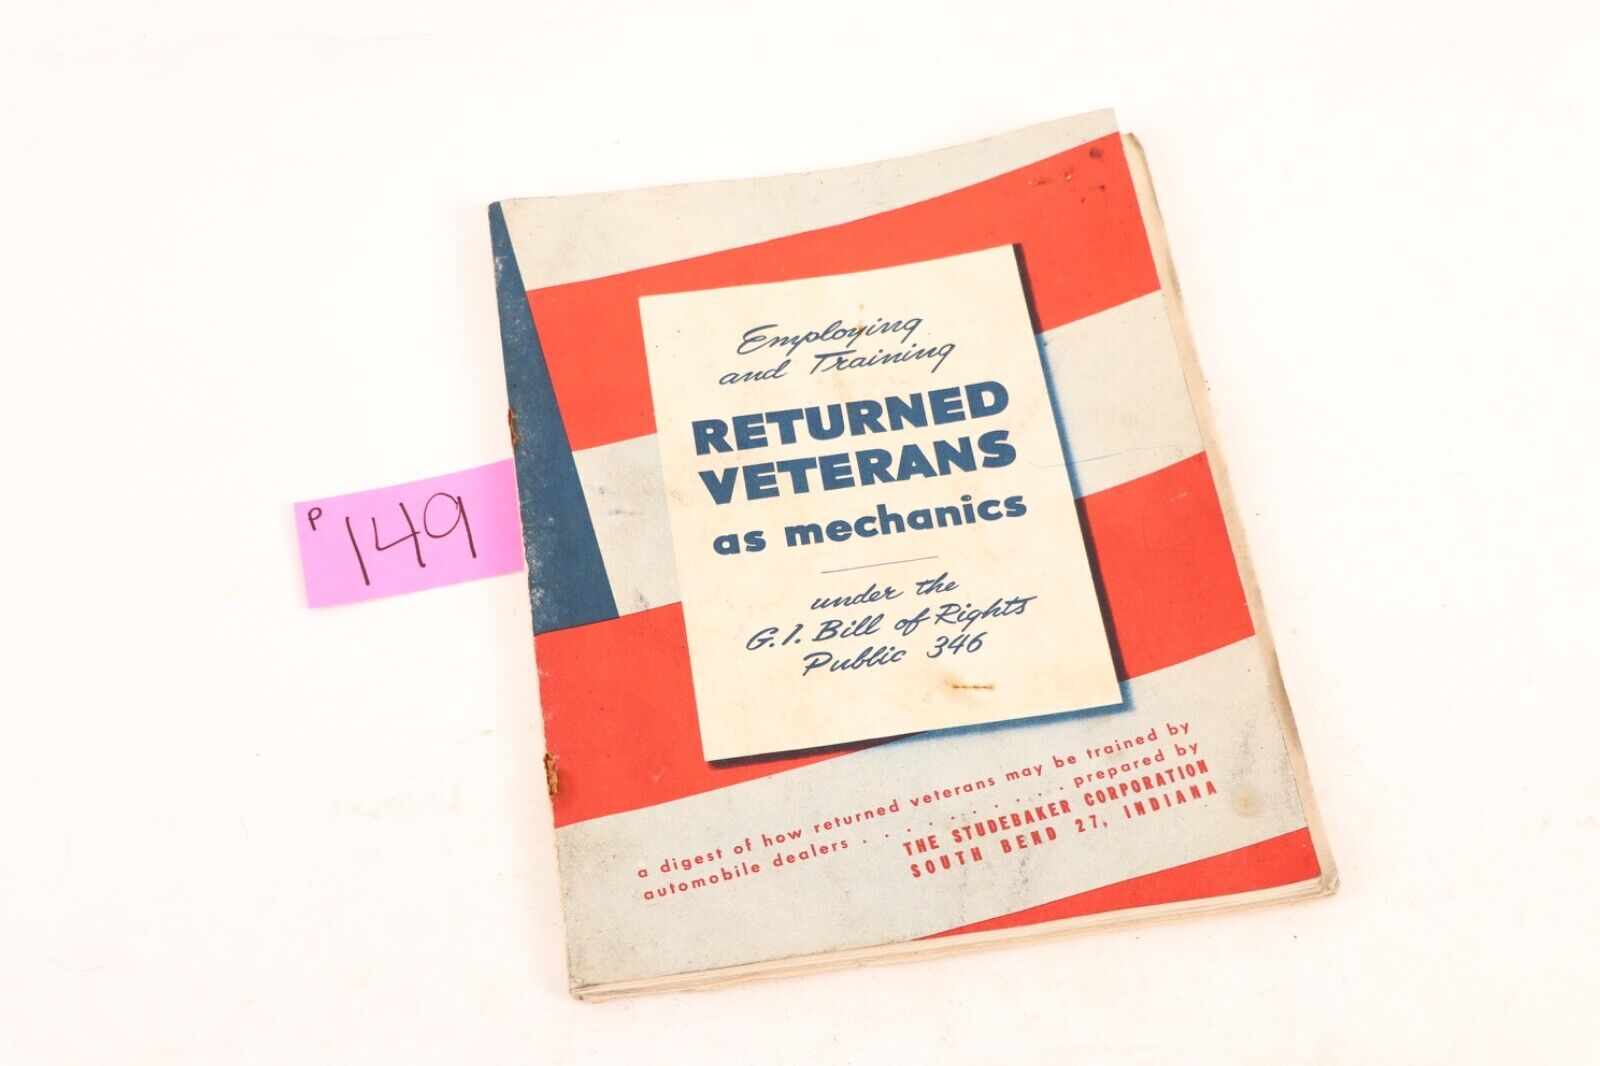 WWII Era Book On Employing and Training Returned Veterans as Mechanics